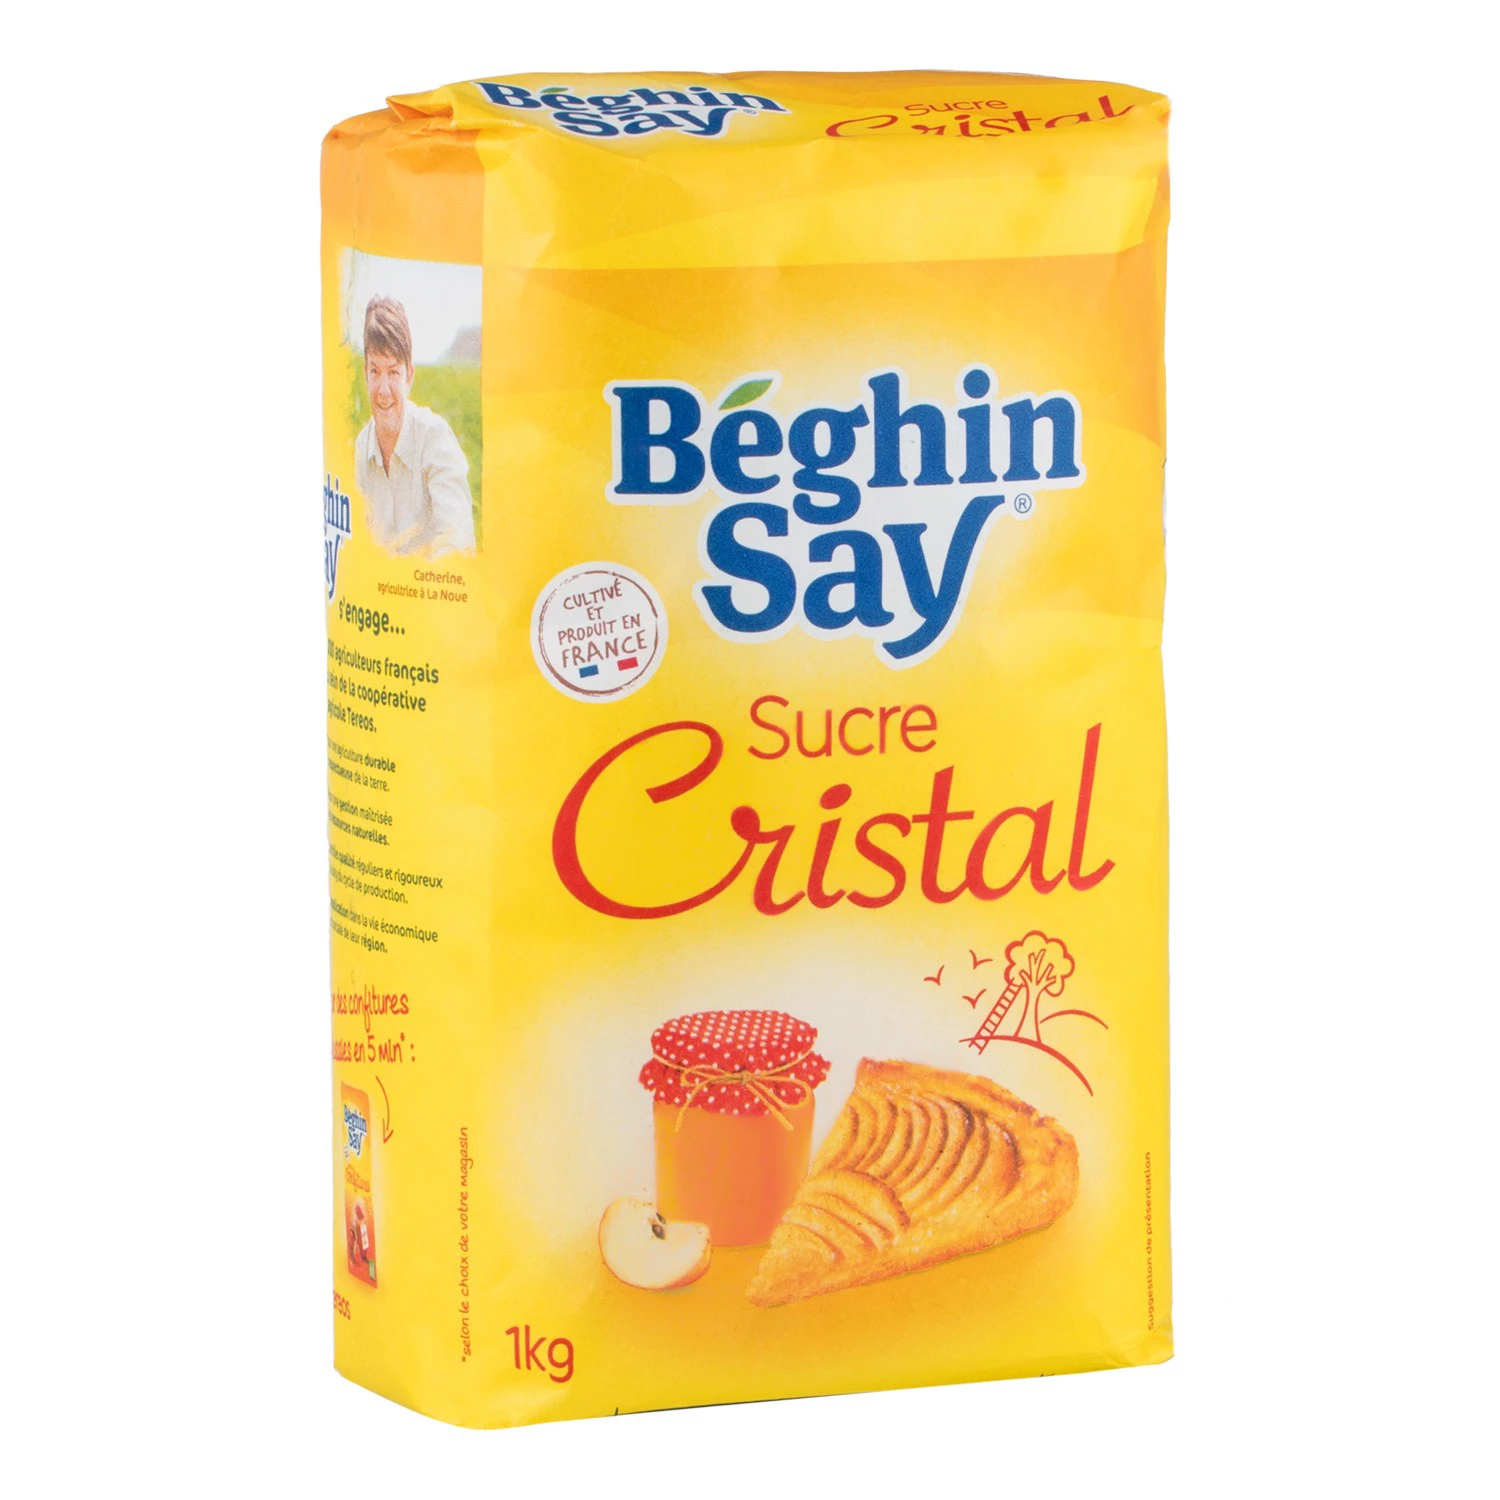 Sucre Cristal 1kg - BEGHIN SAY